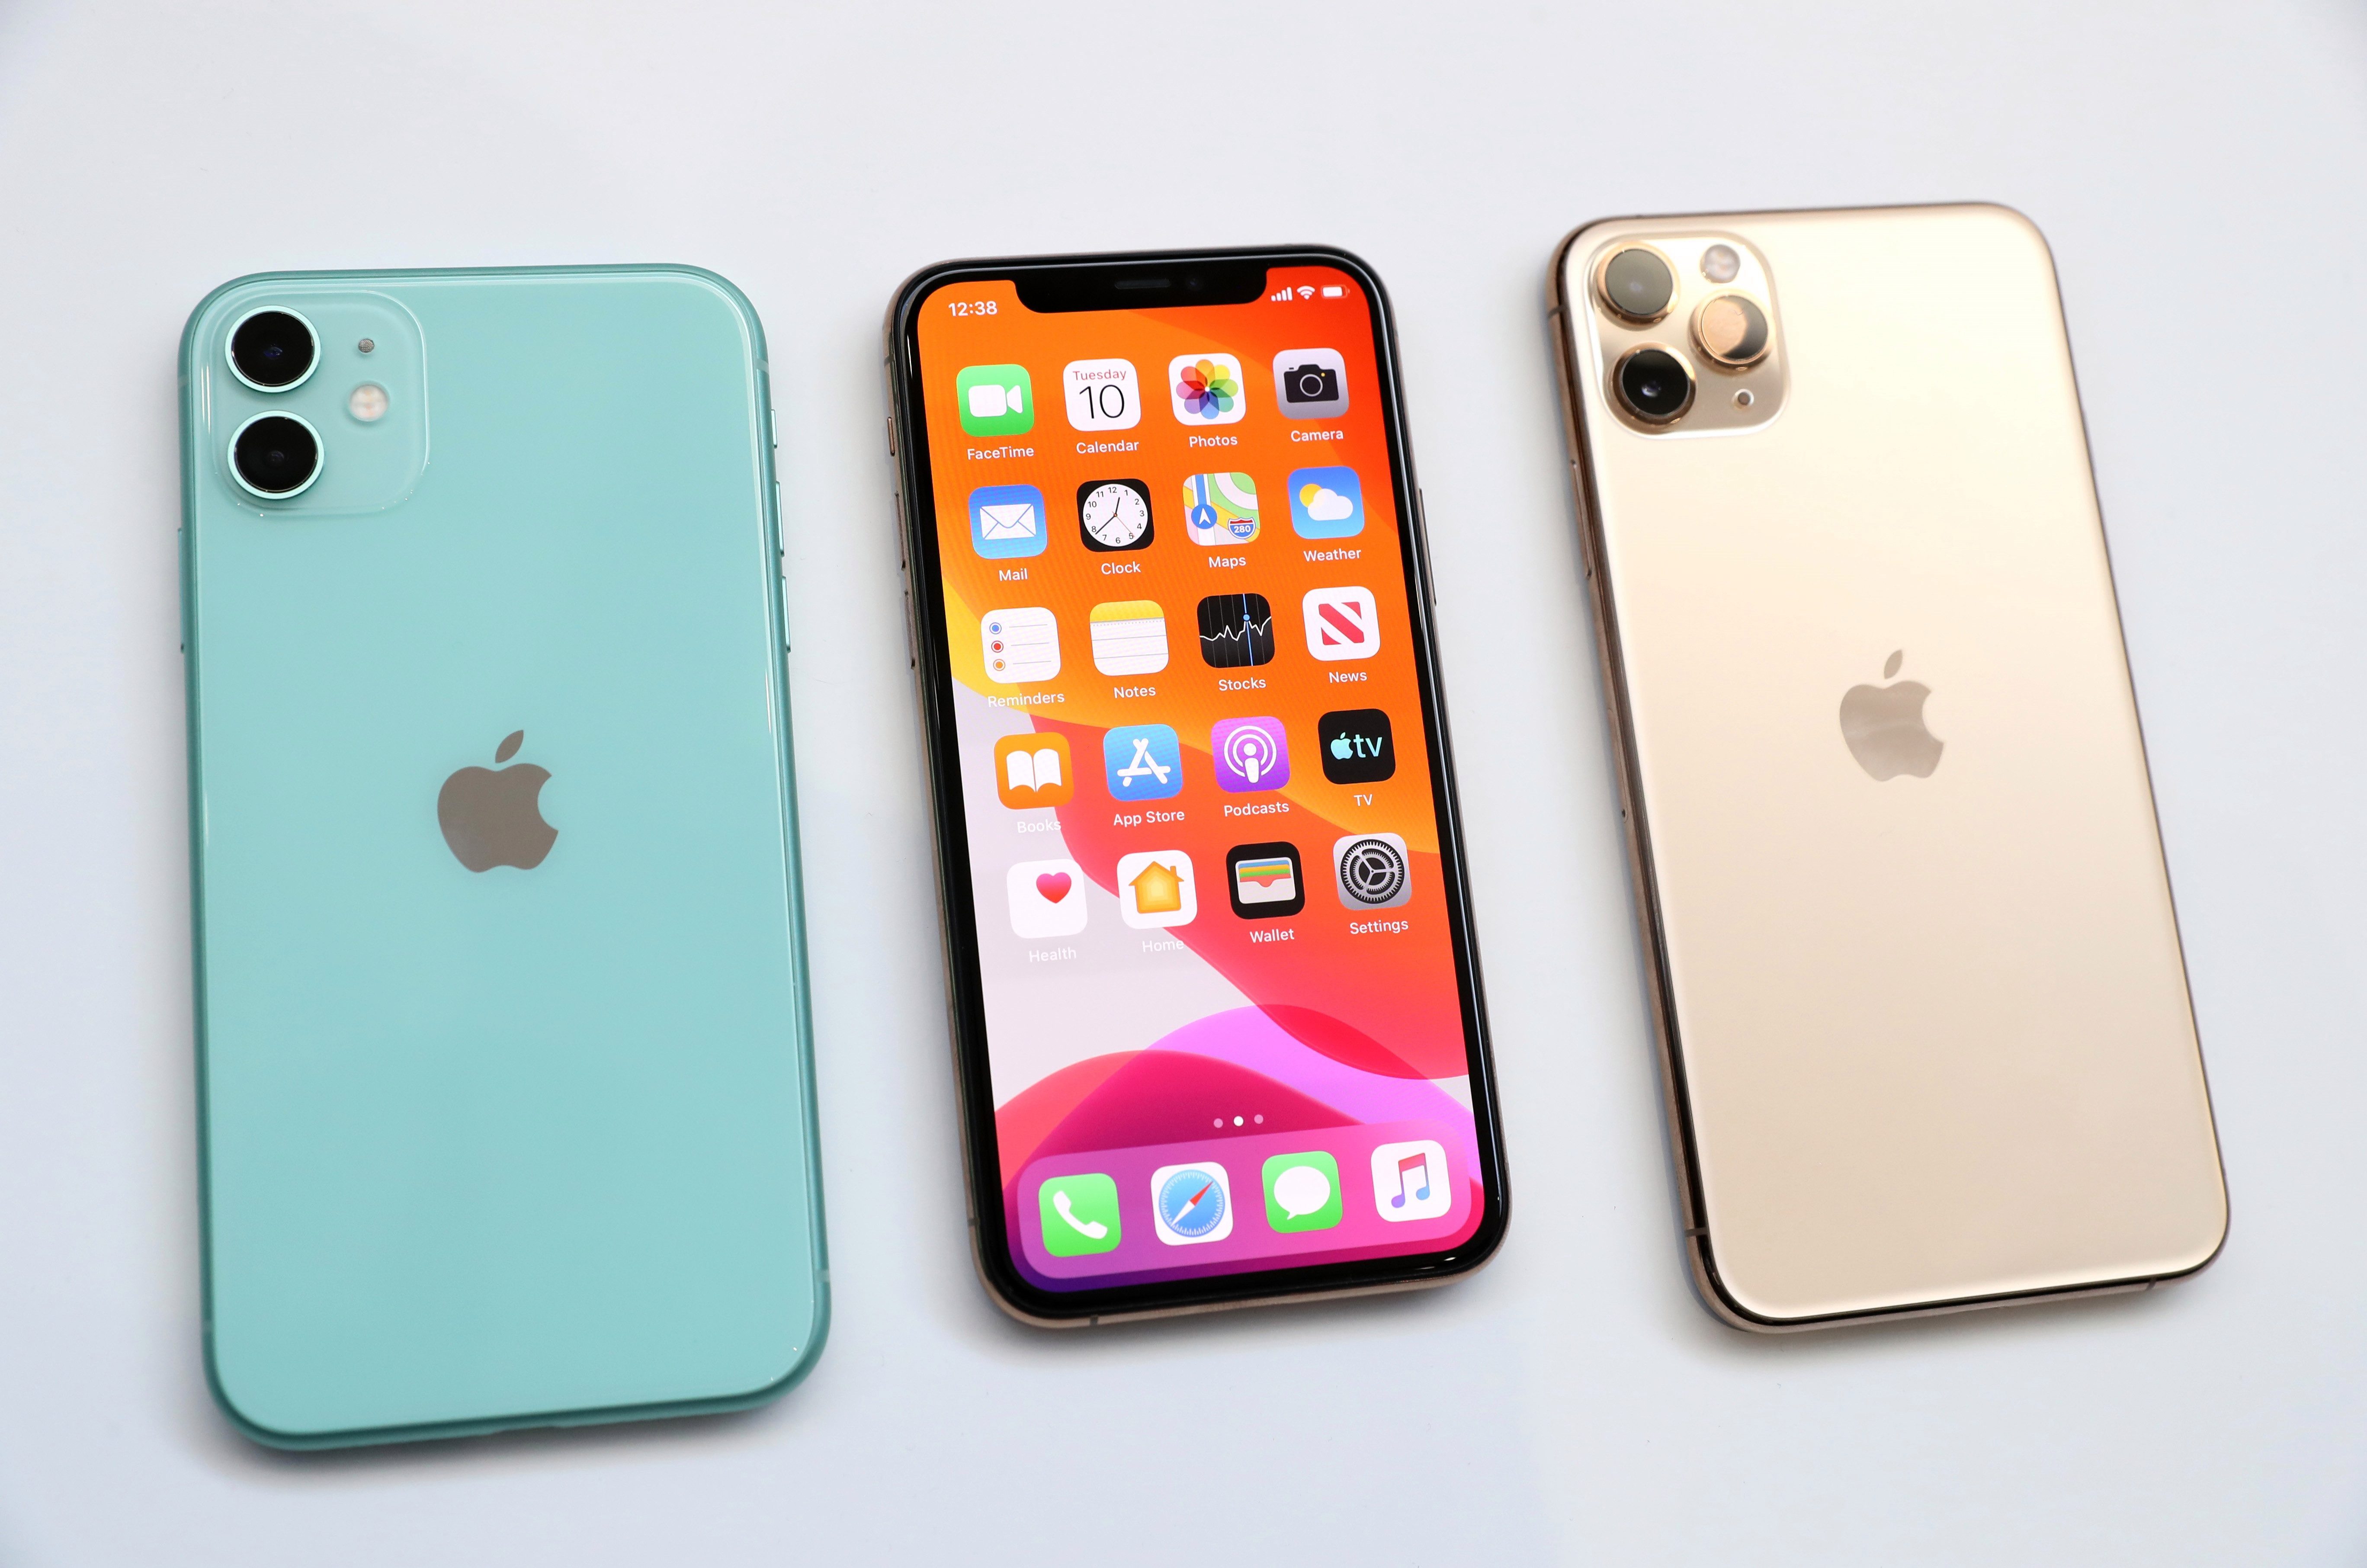  Apple meluncurkan tiga handset baru minggu lalu, iPhone 11 (kiri), iPhone 11 Pro (tengah) dan iPhone 11 Pro Max (kanan)